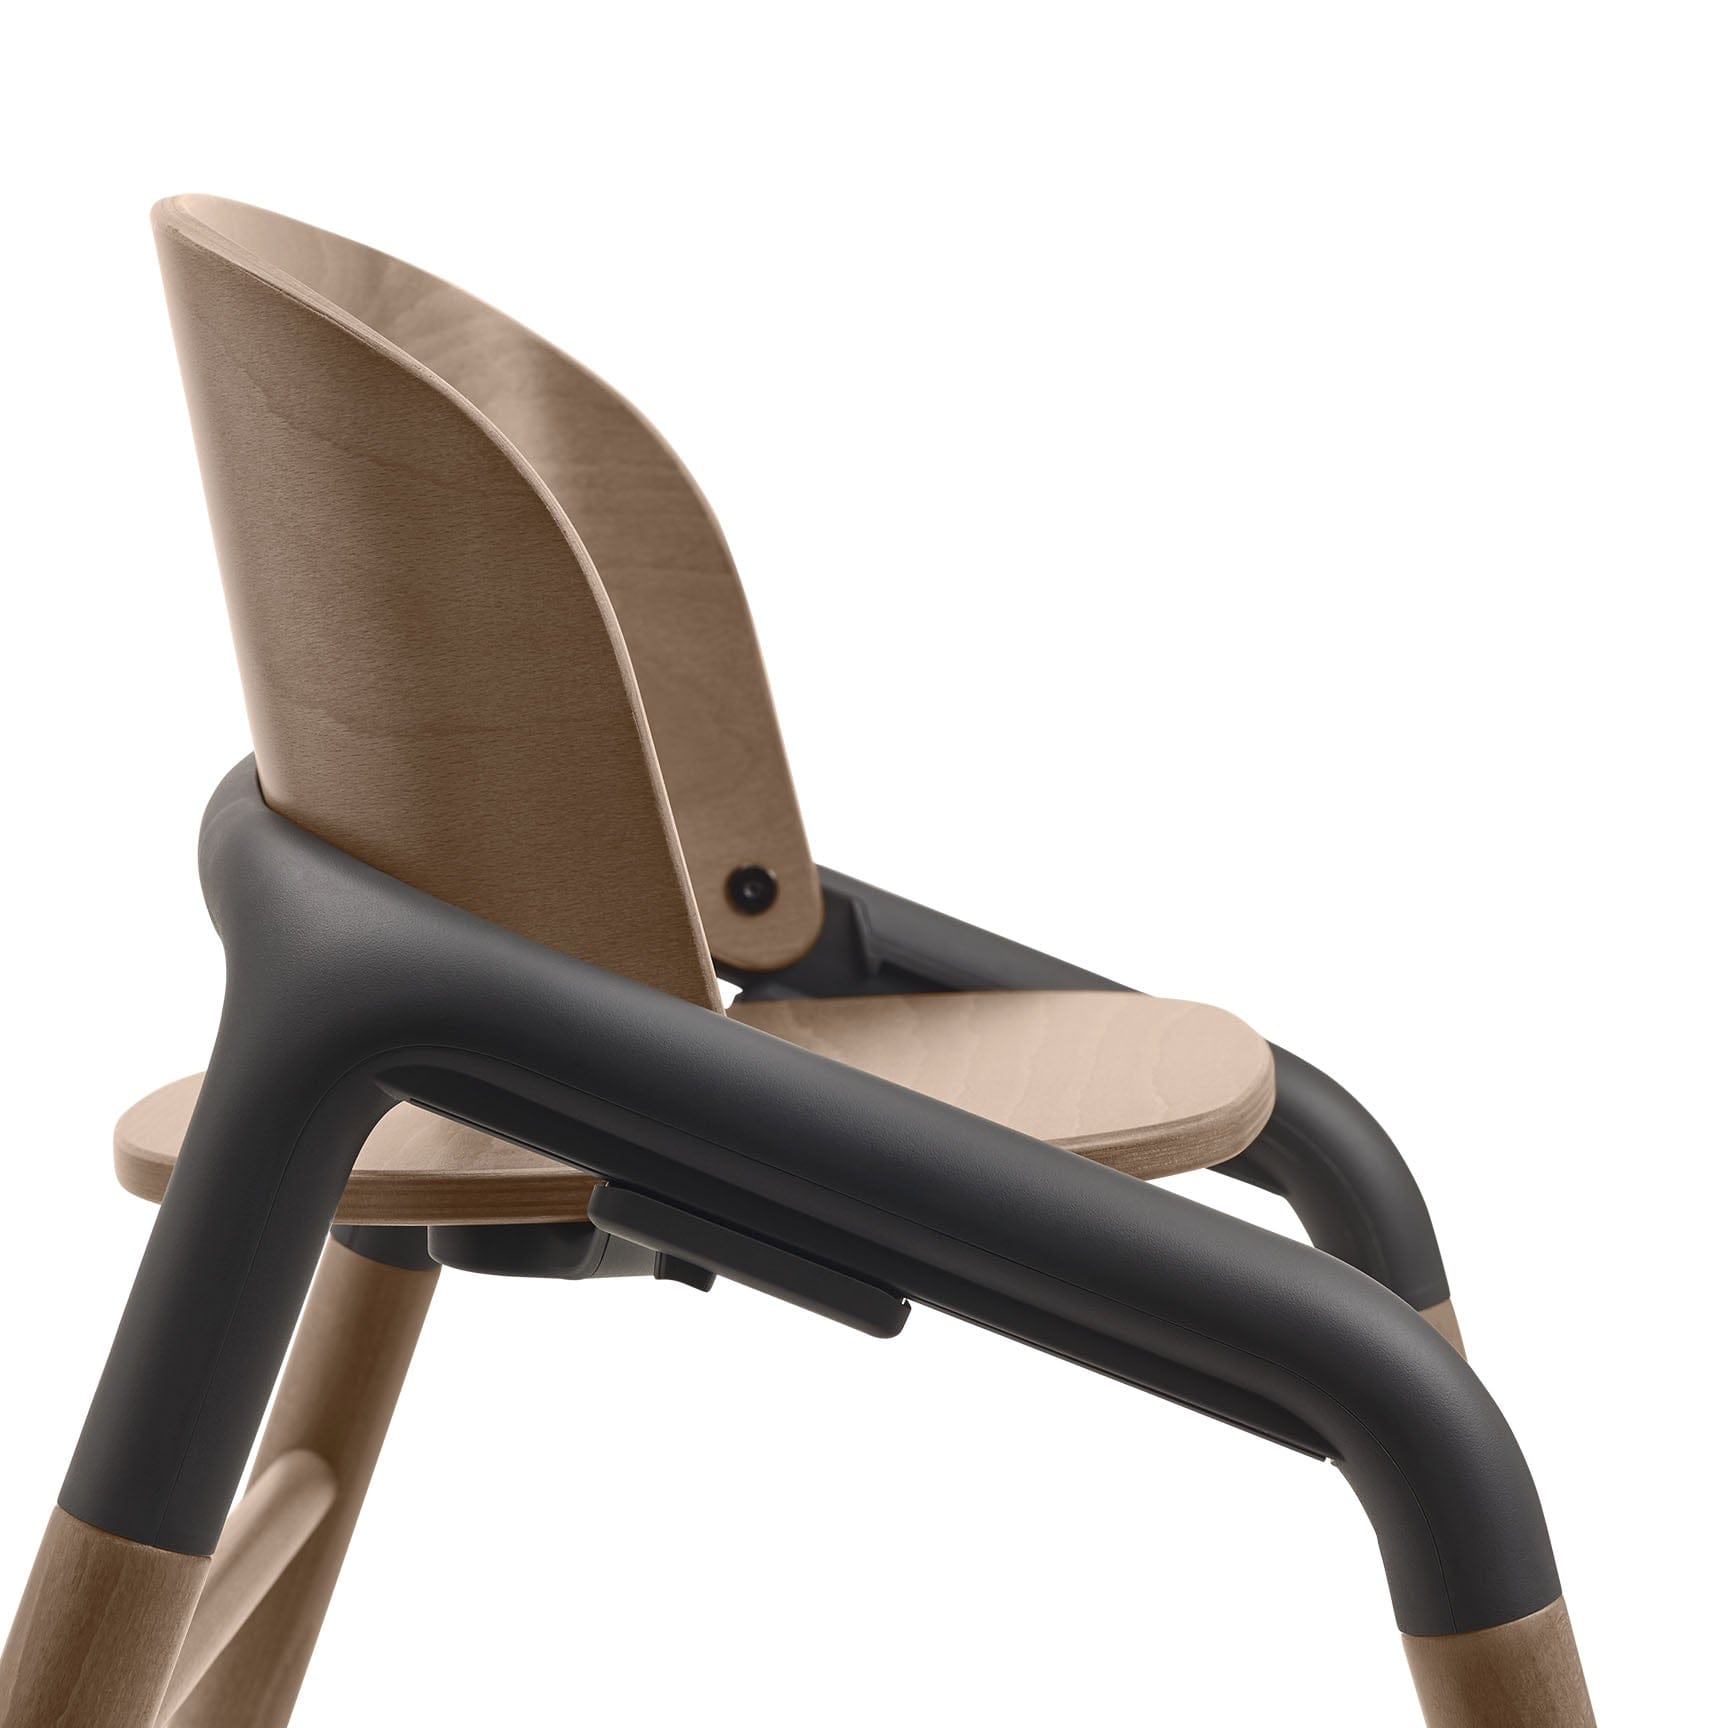 Bugaboo Giraffe Chair and Newborn Set in Wood Grey Baby Highchairs 12260-WOO-GRY 8717447550105